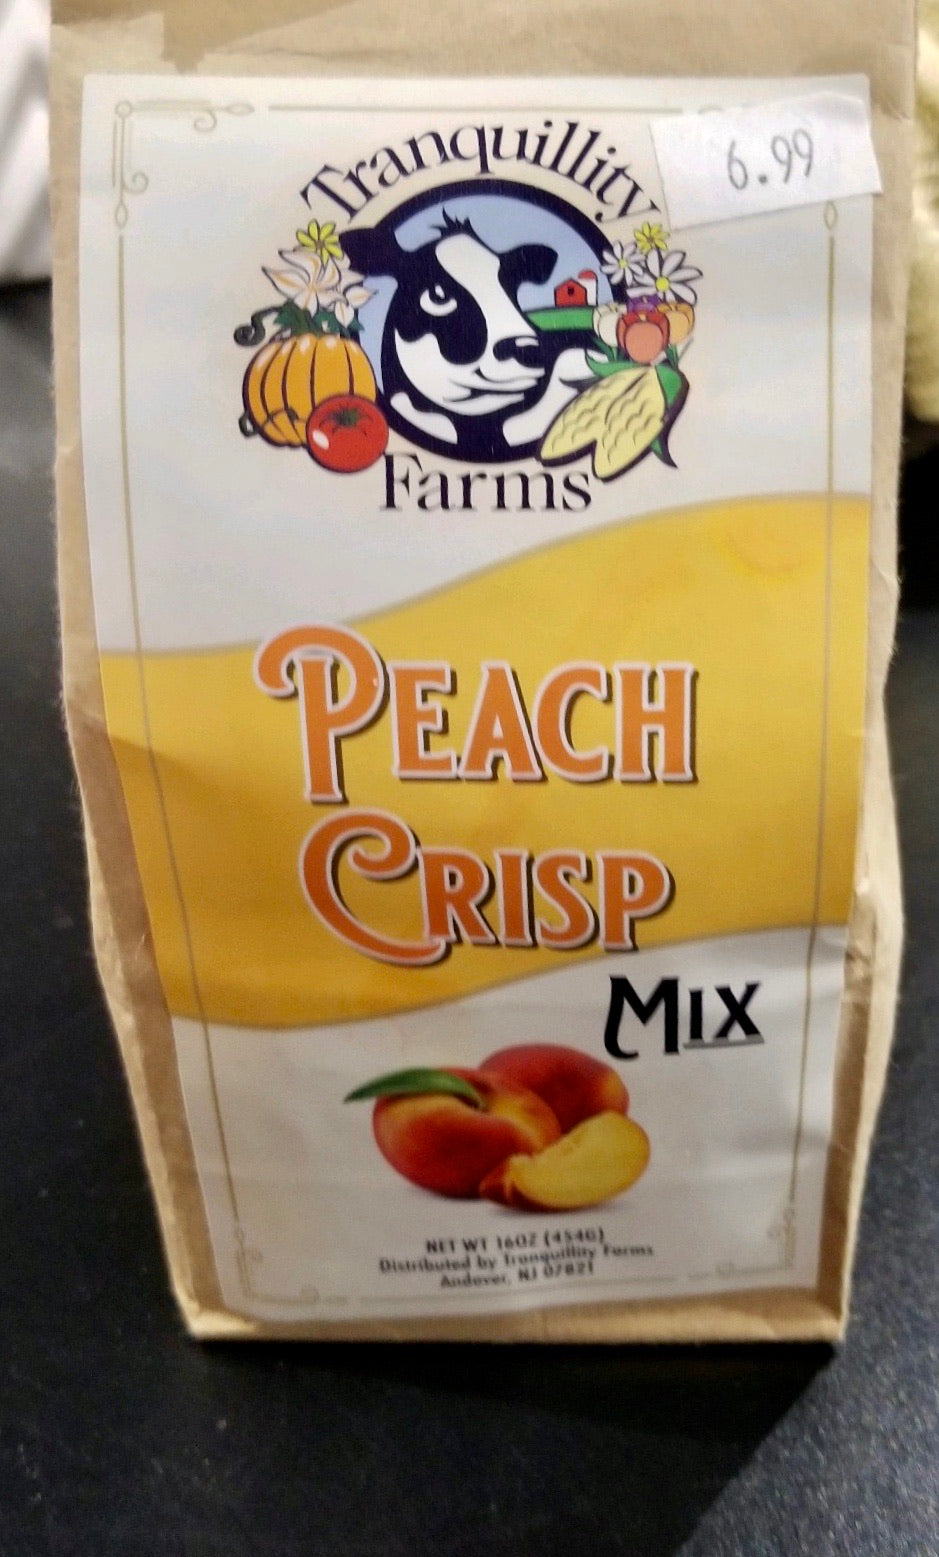 Peach crisp mix